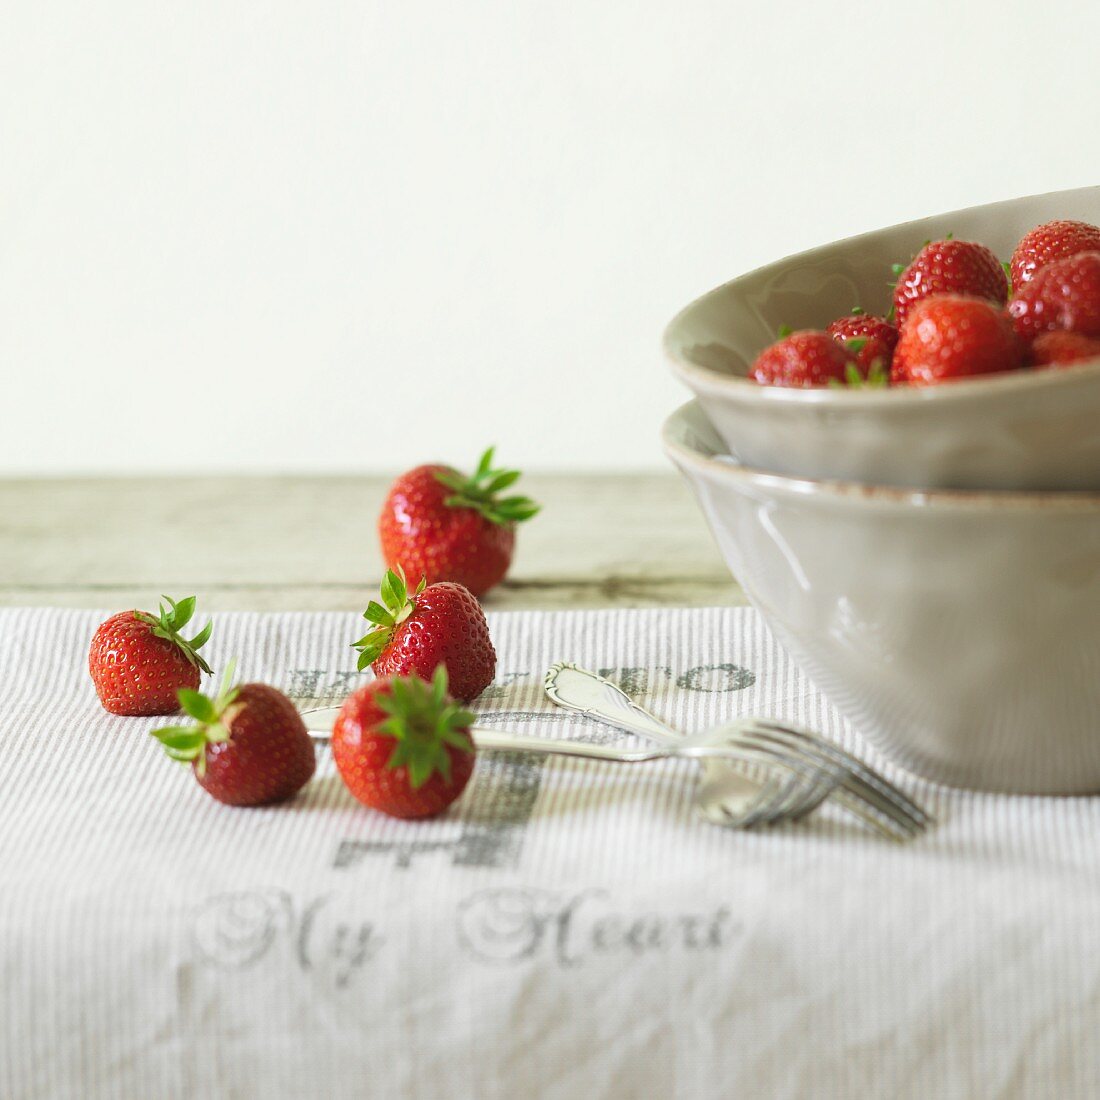 Fresh strawberries in a ceramic dish